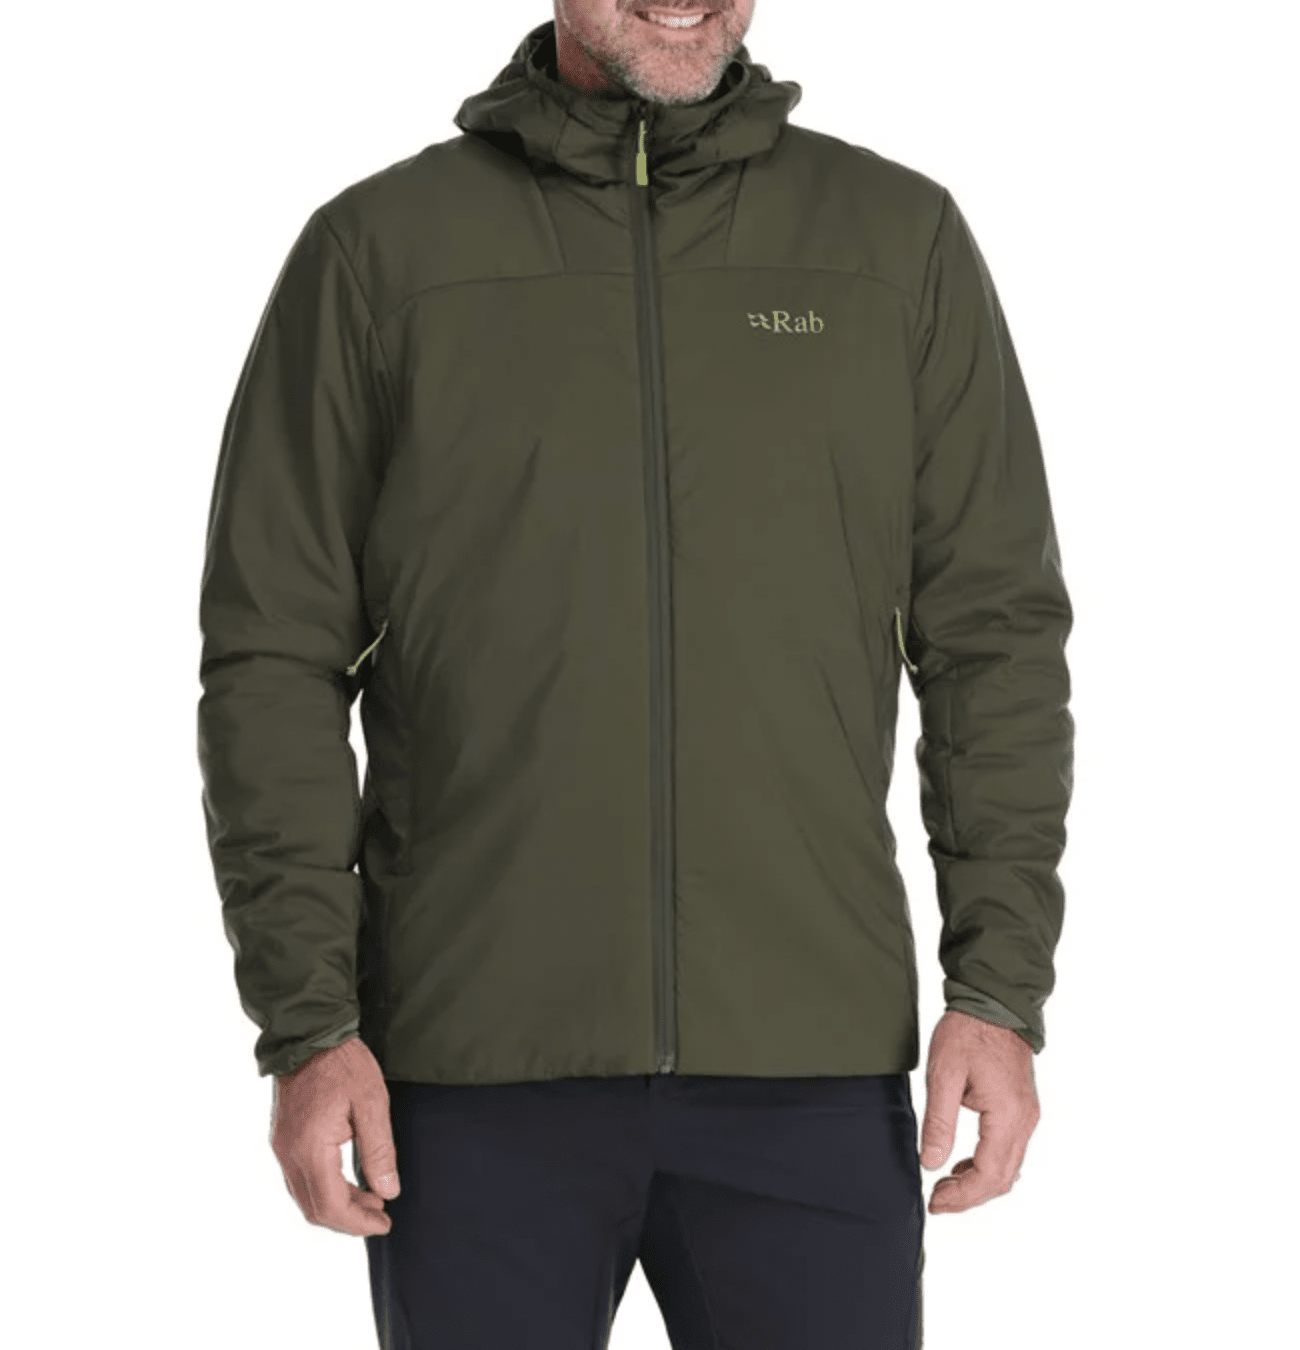 Xenair Alpine Light Jacket - Men's